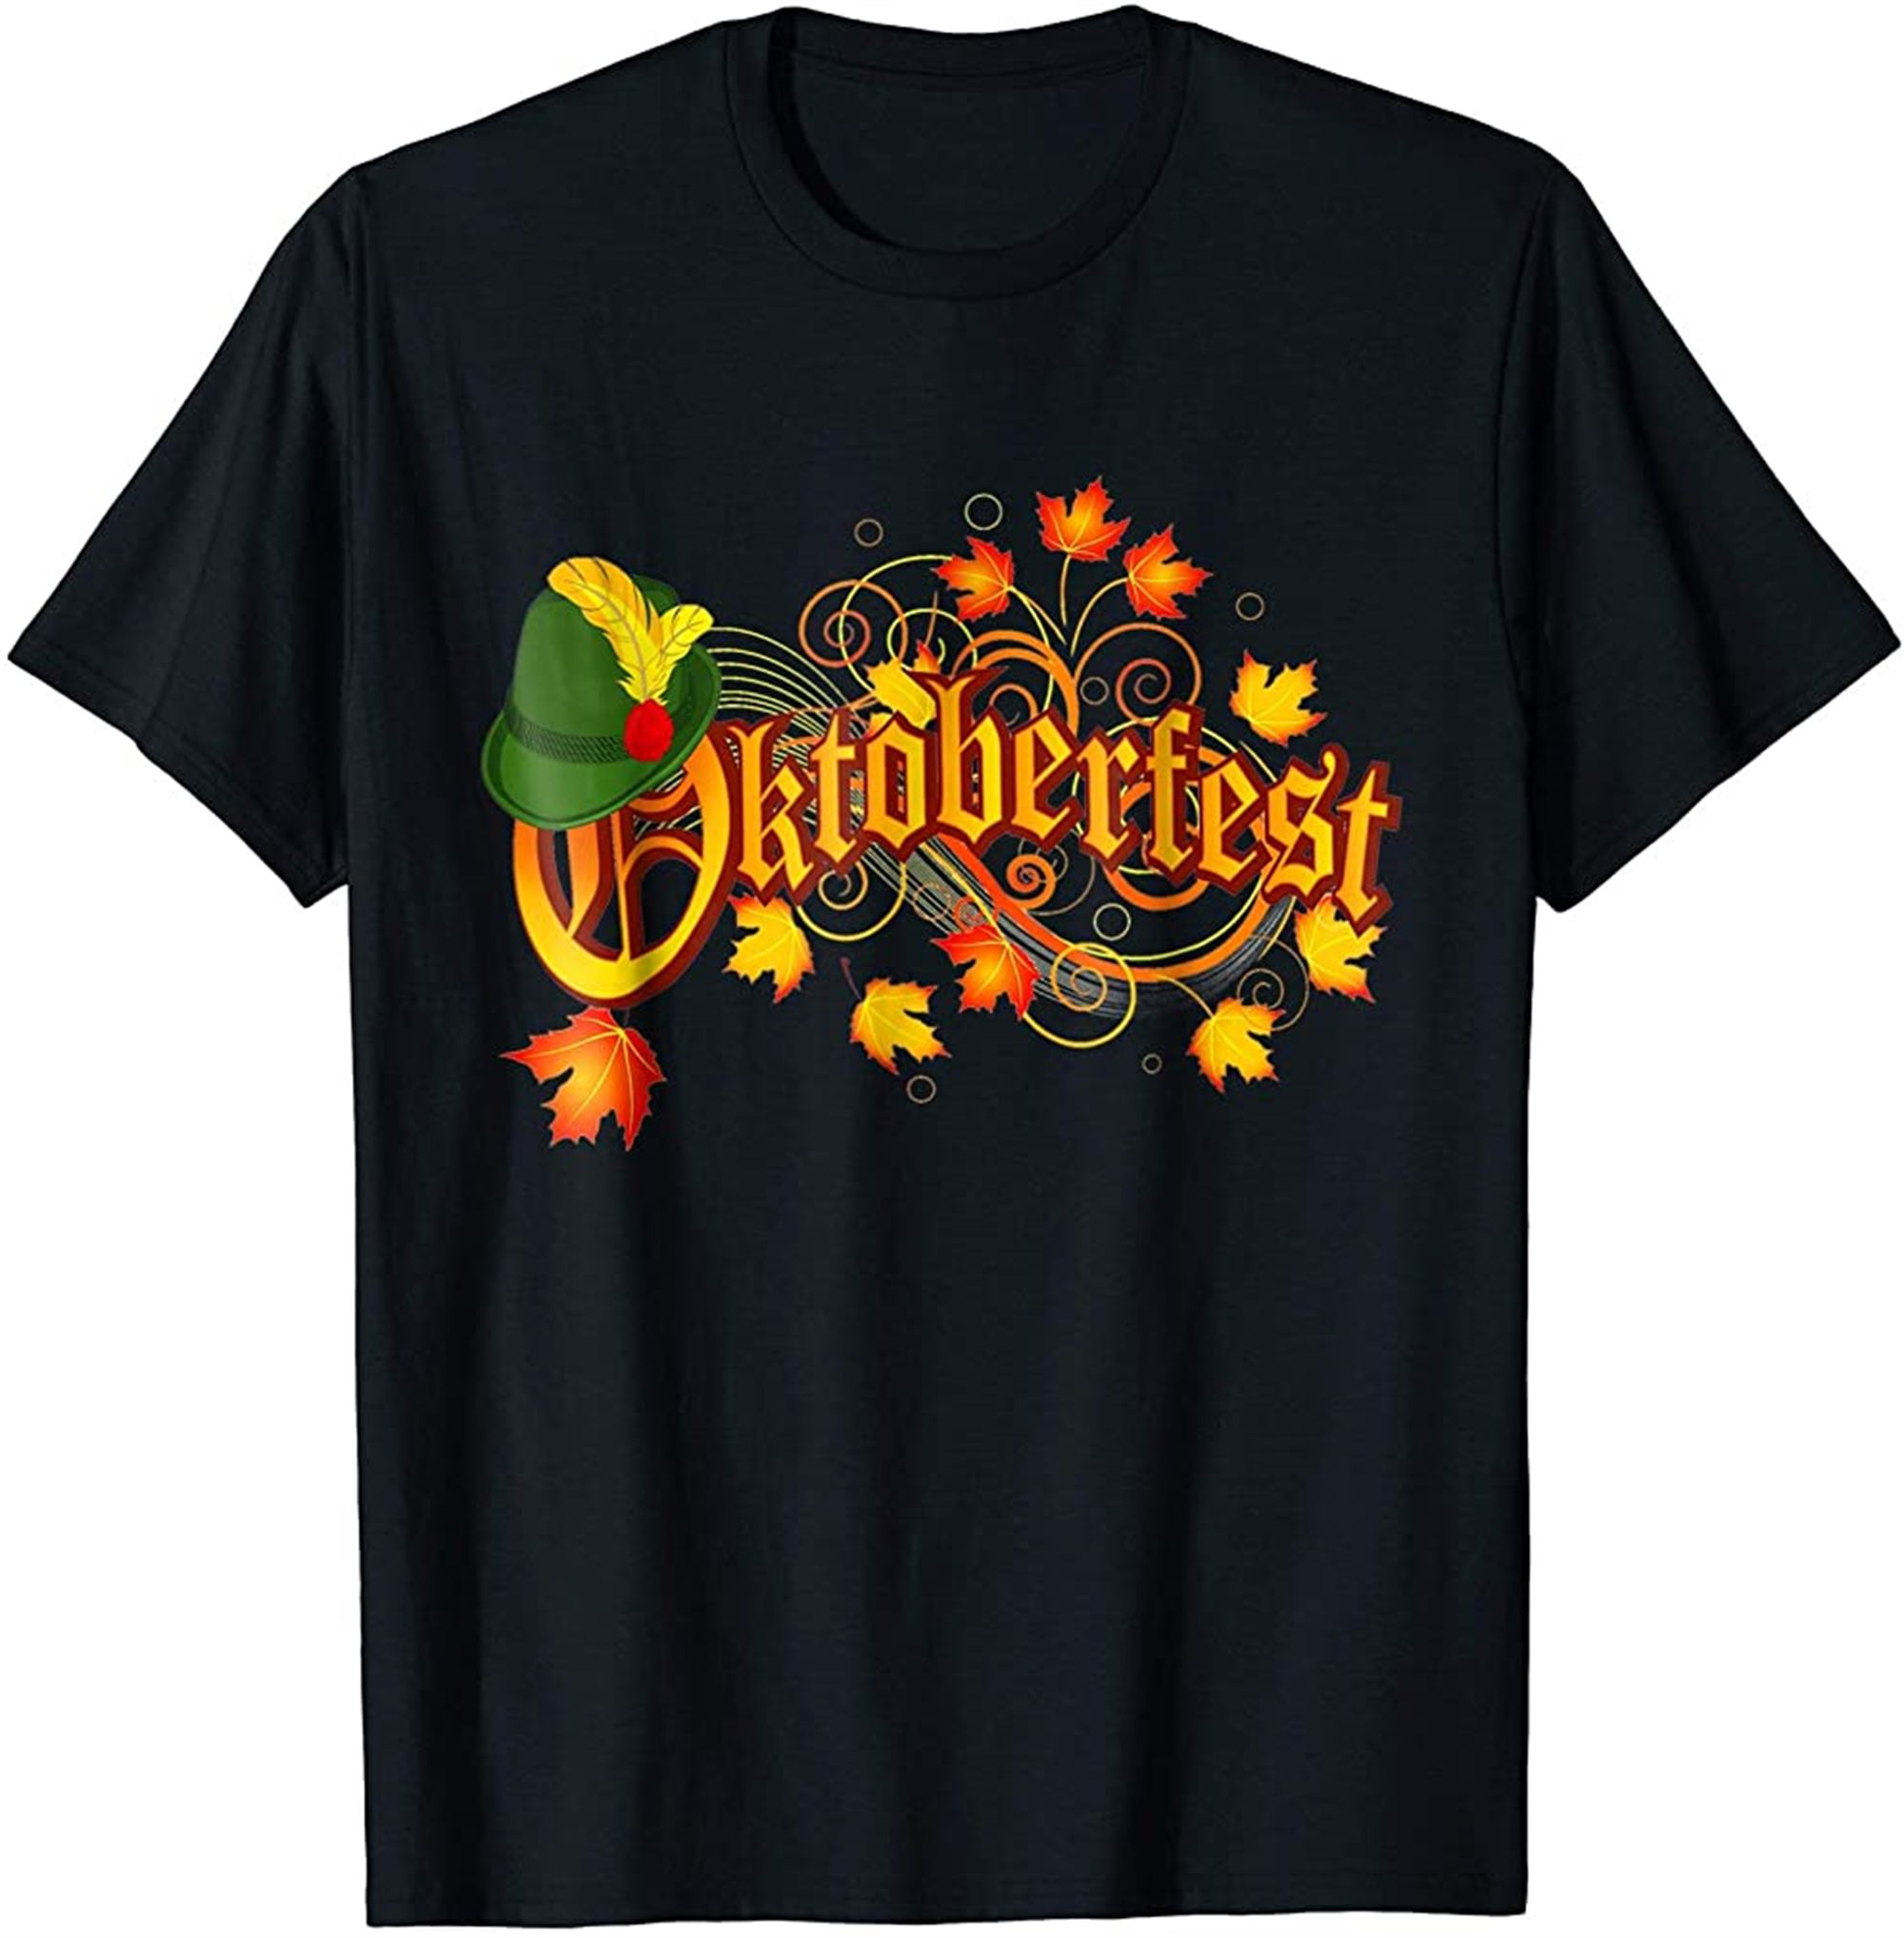 Oktoberfest T-shirt German Beer Festival October Tee Full Size Up To 5xl